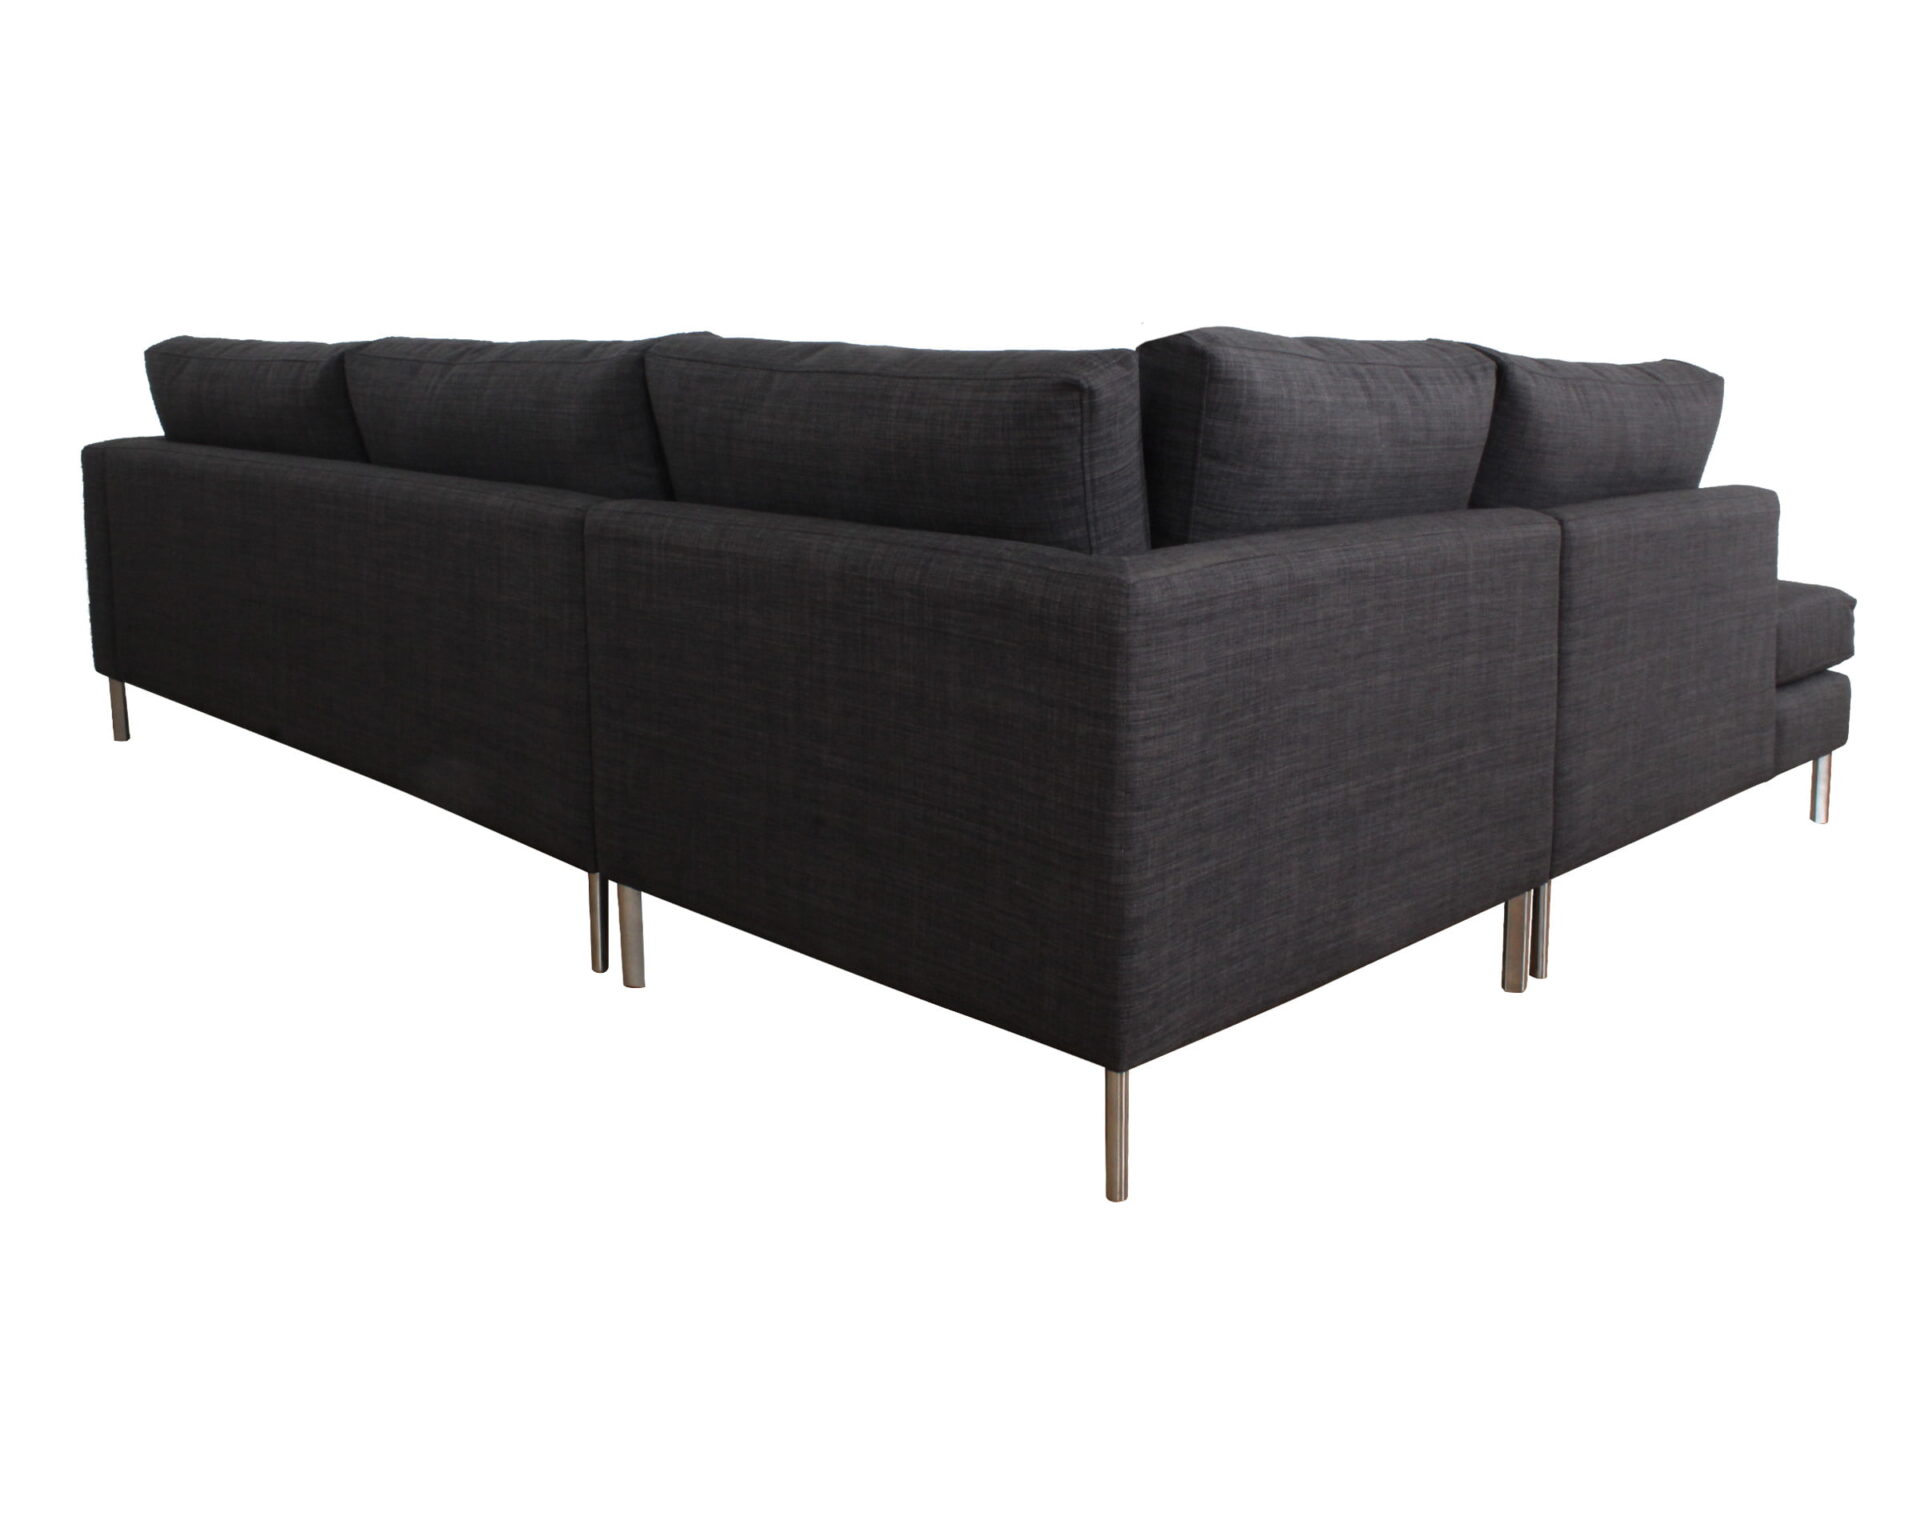 sofa modular izquierdo espacio libre bariloche marengo pata biselada plata 7